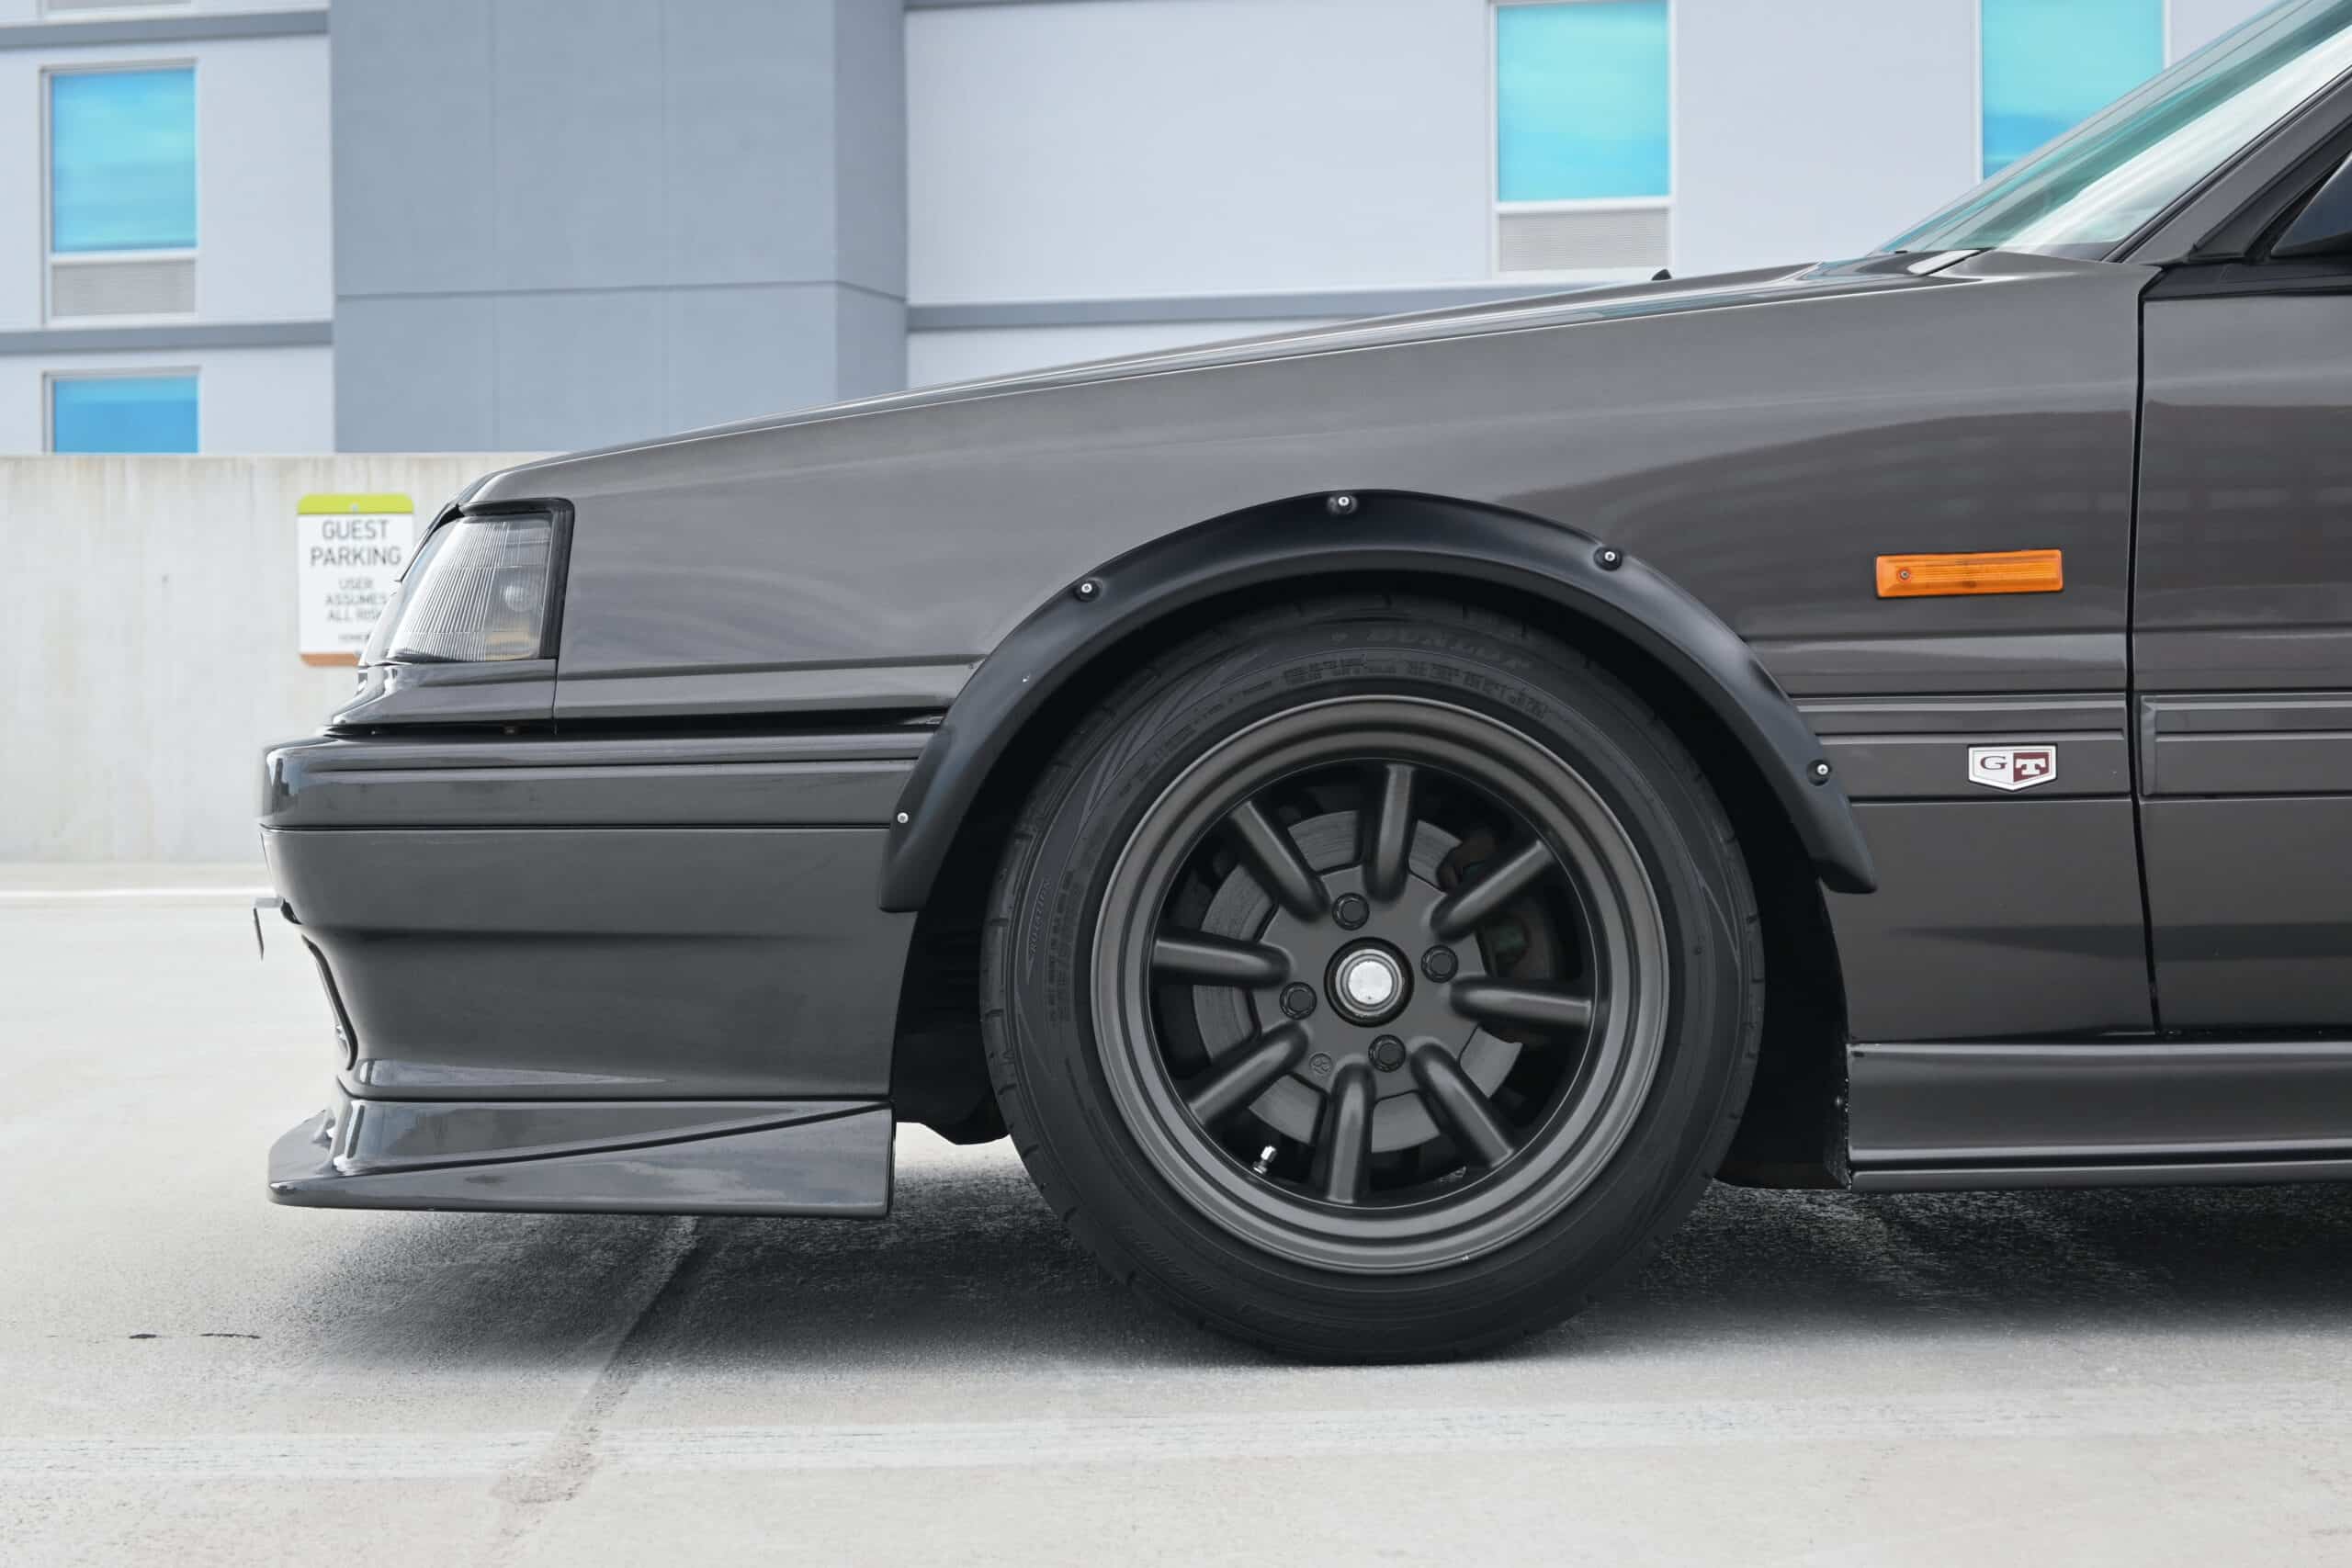 1988 Nissan Skyline GTS  Built/restored by R31 House | RB25det | Watanabe wheels | A/C